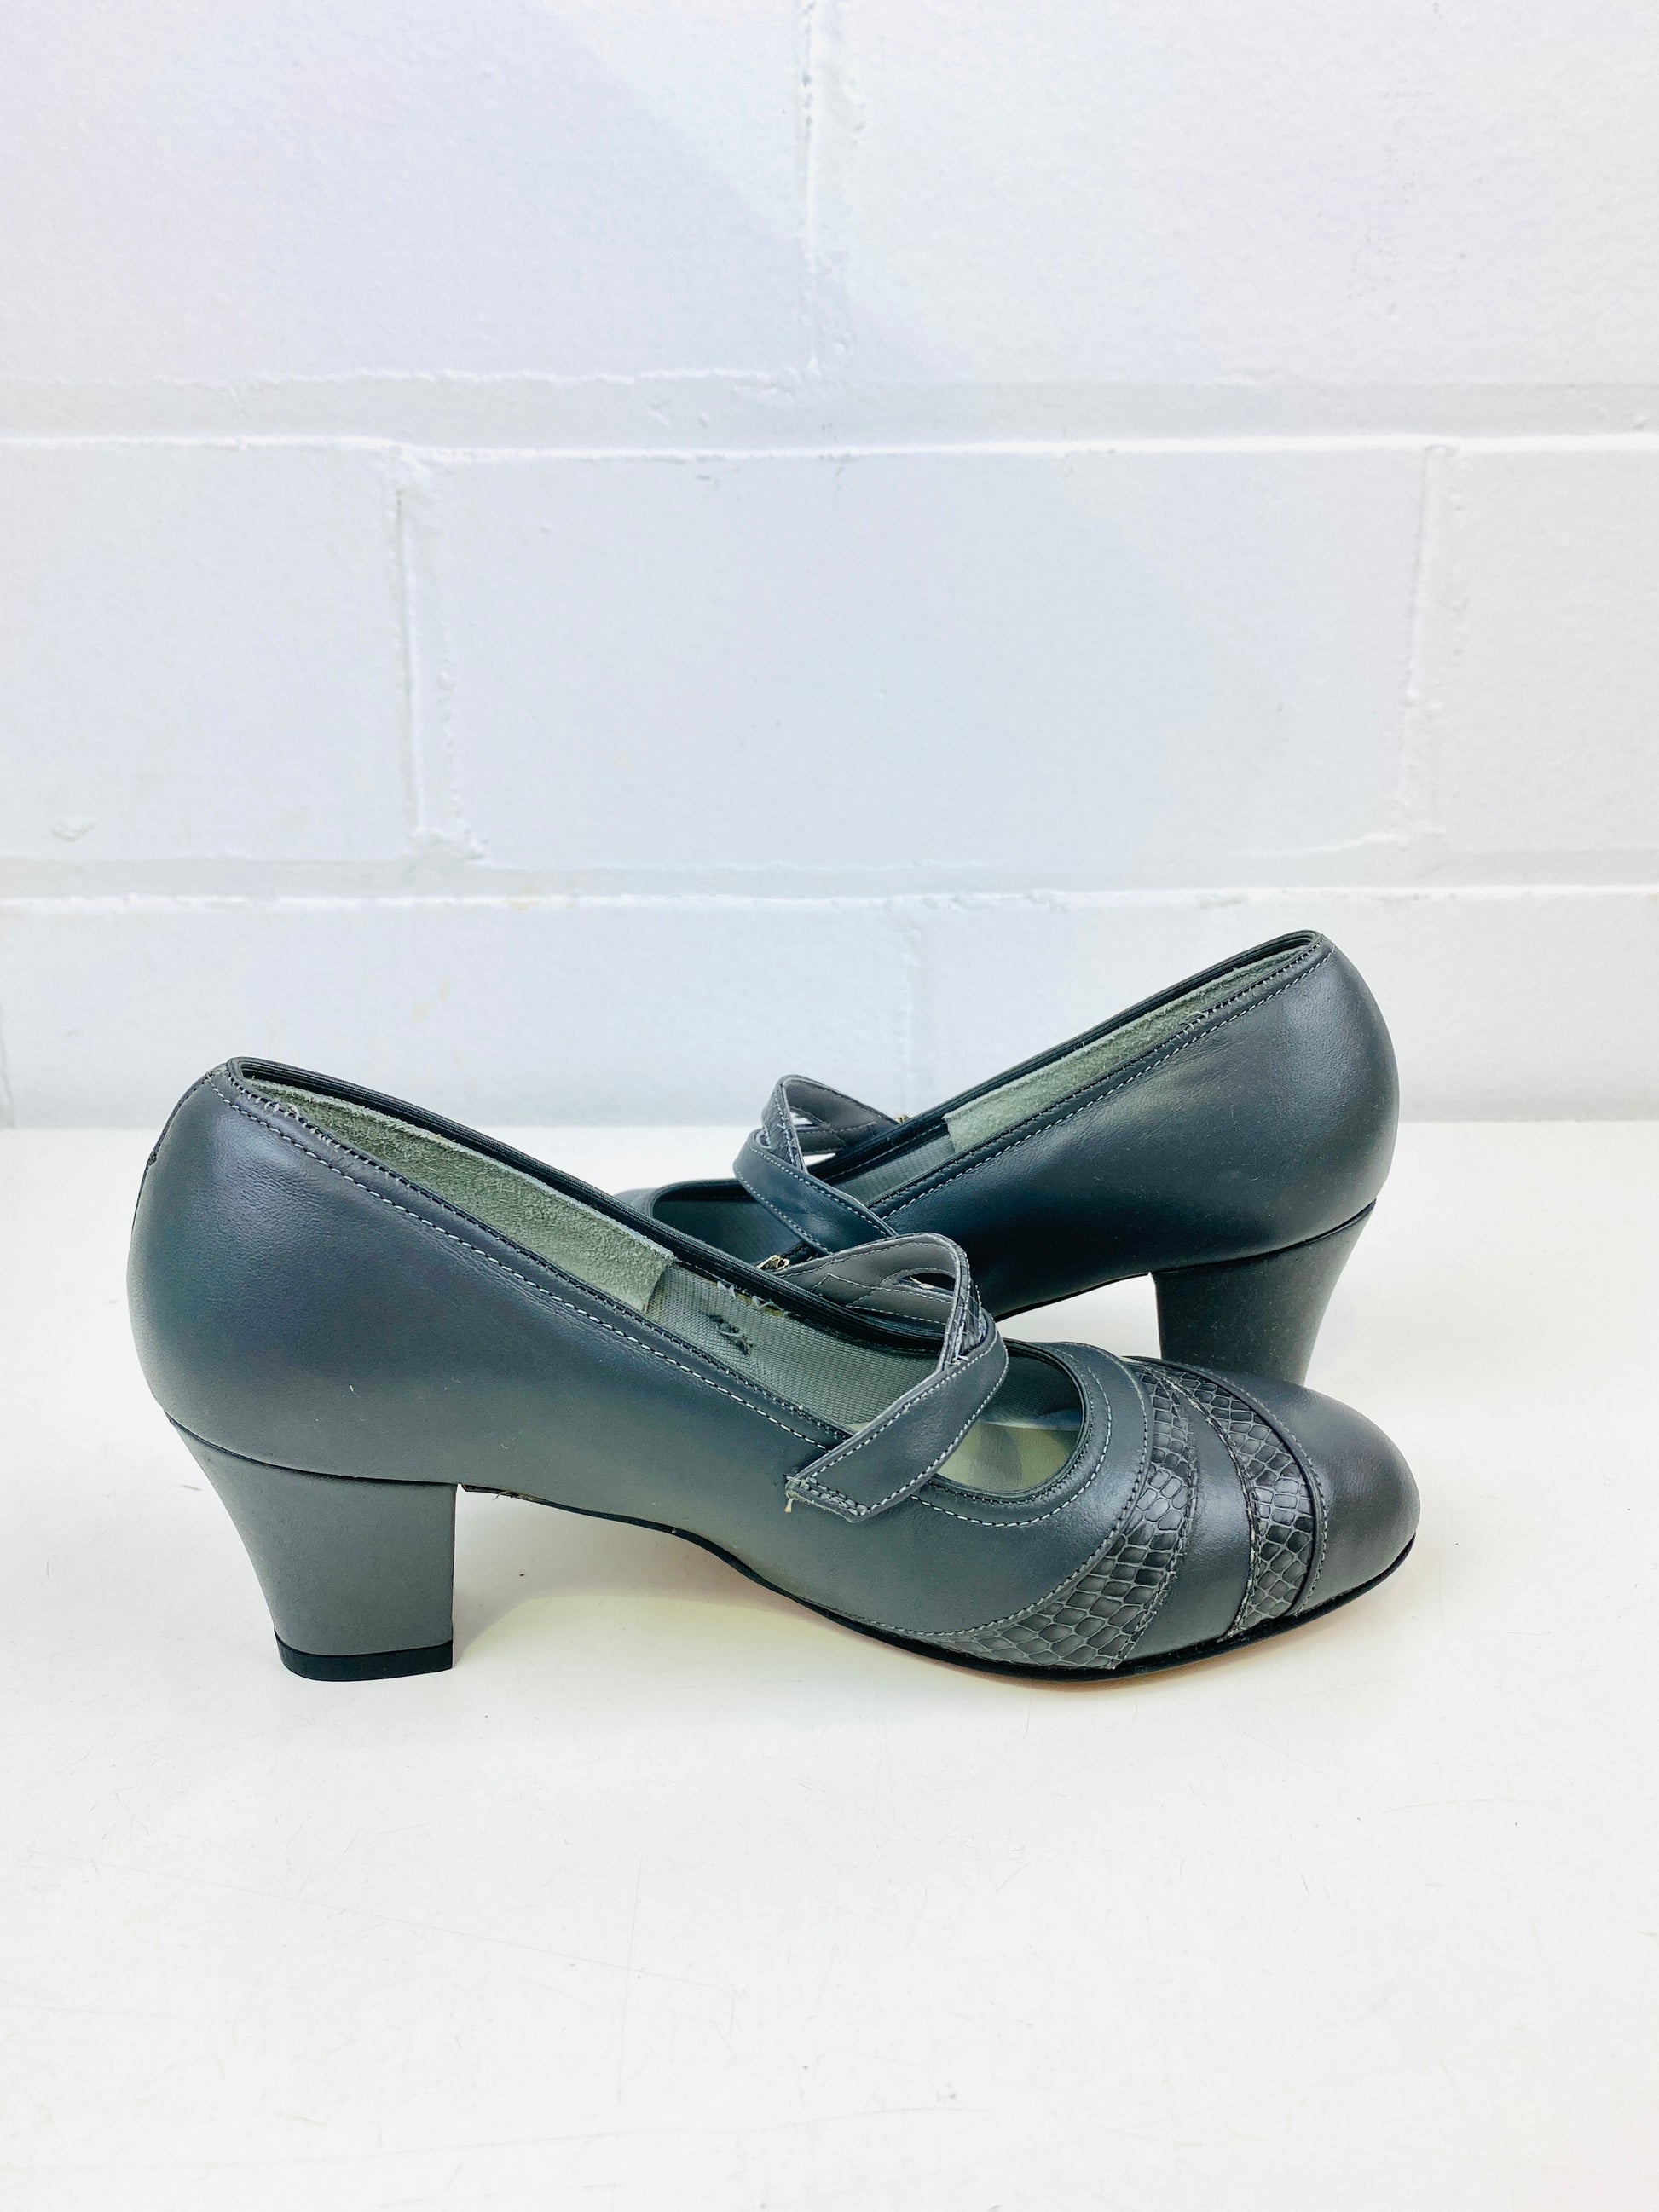 Vintage Deadstock Shoes, Women's 1980s Grey Leather Mid-Heel Pumps, NOS, 8485